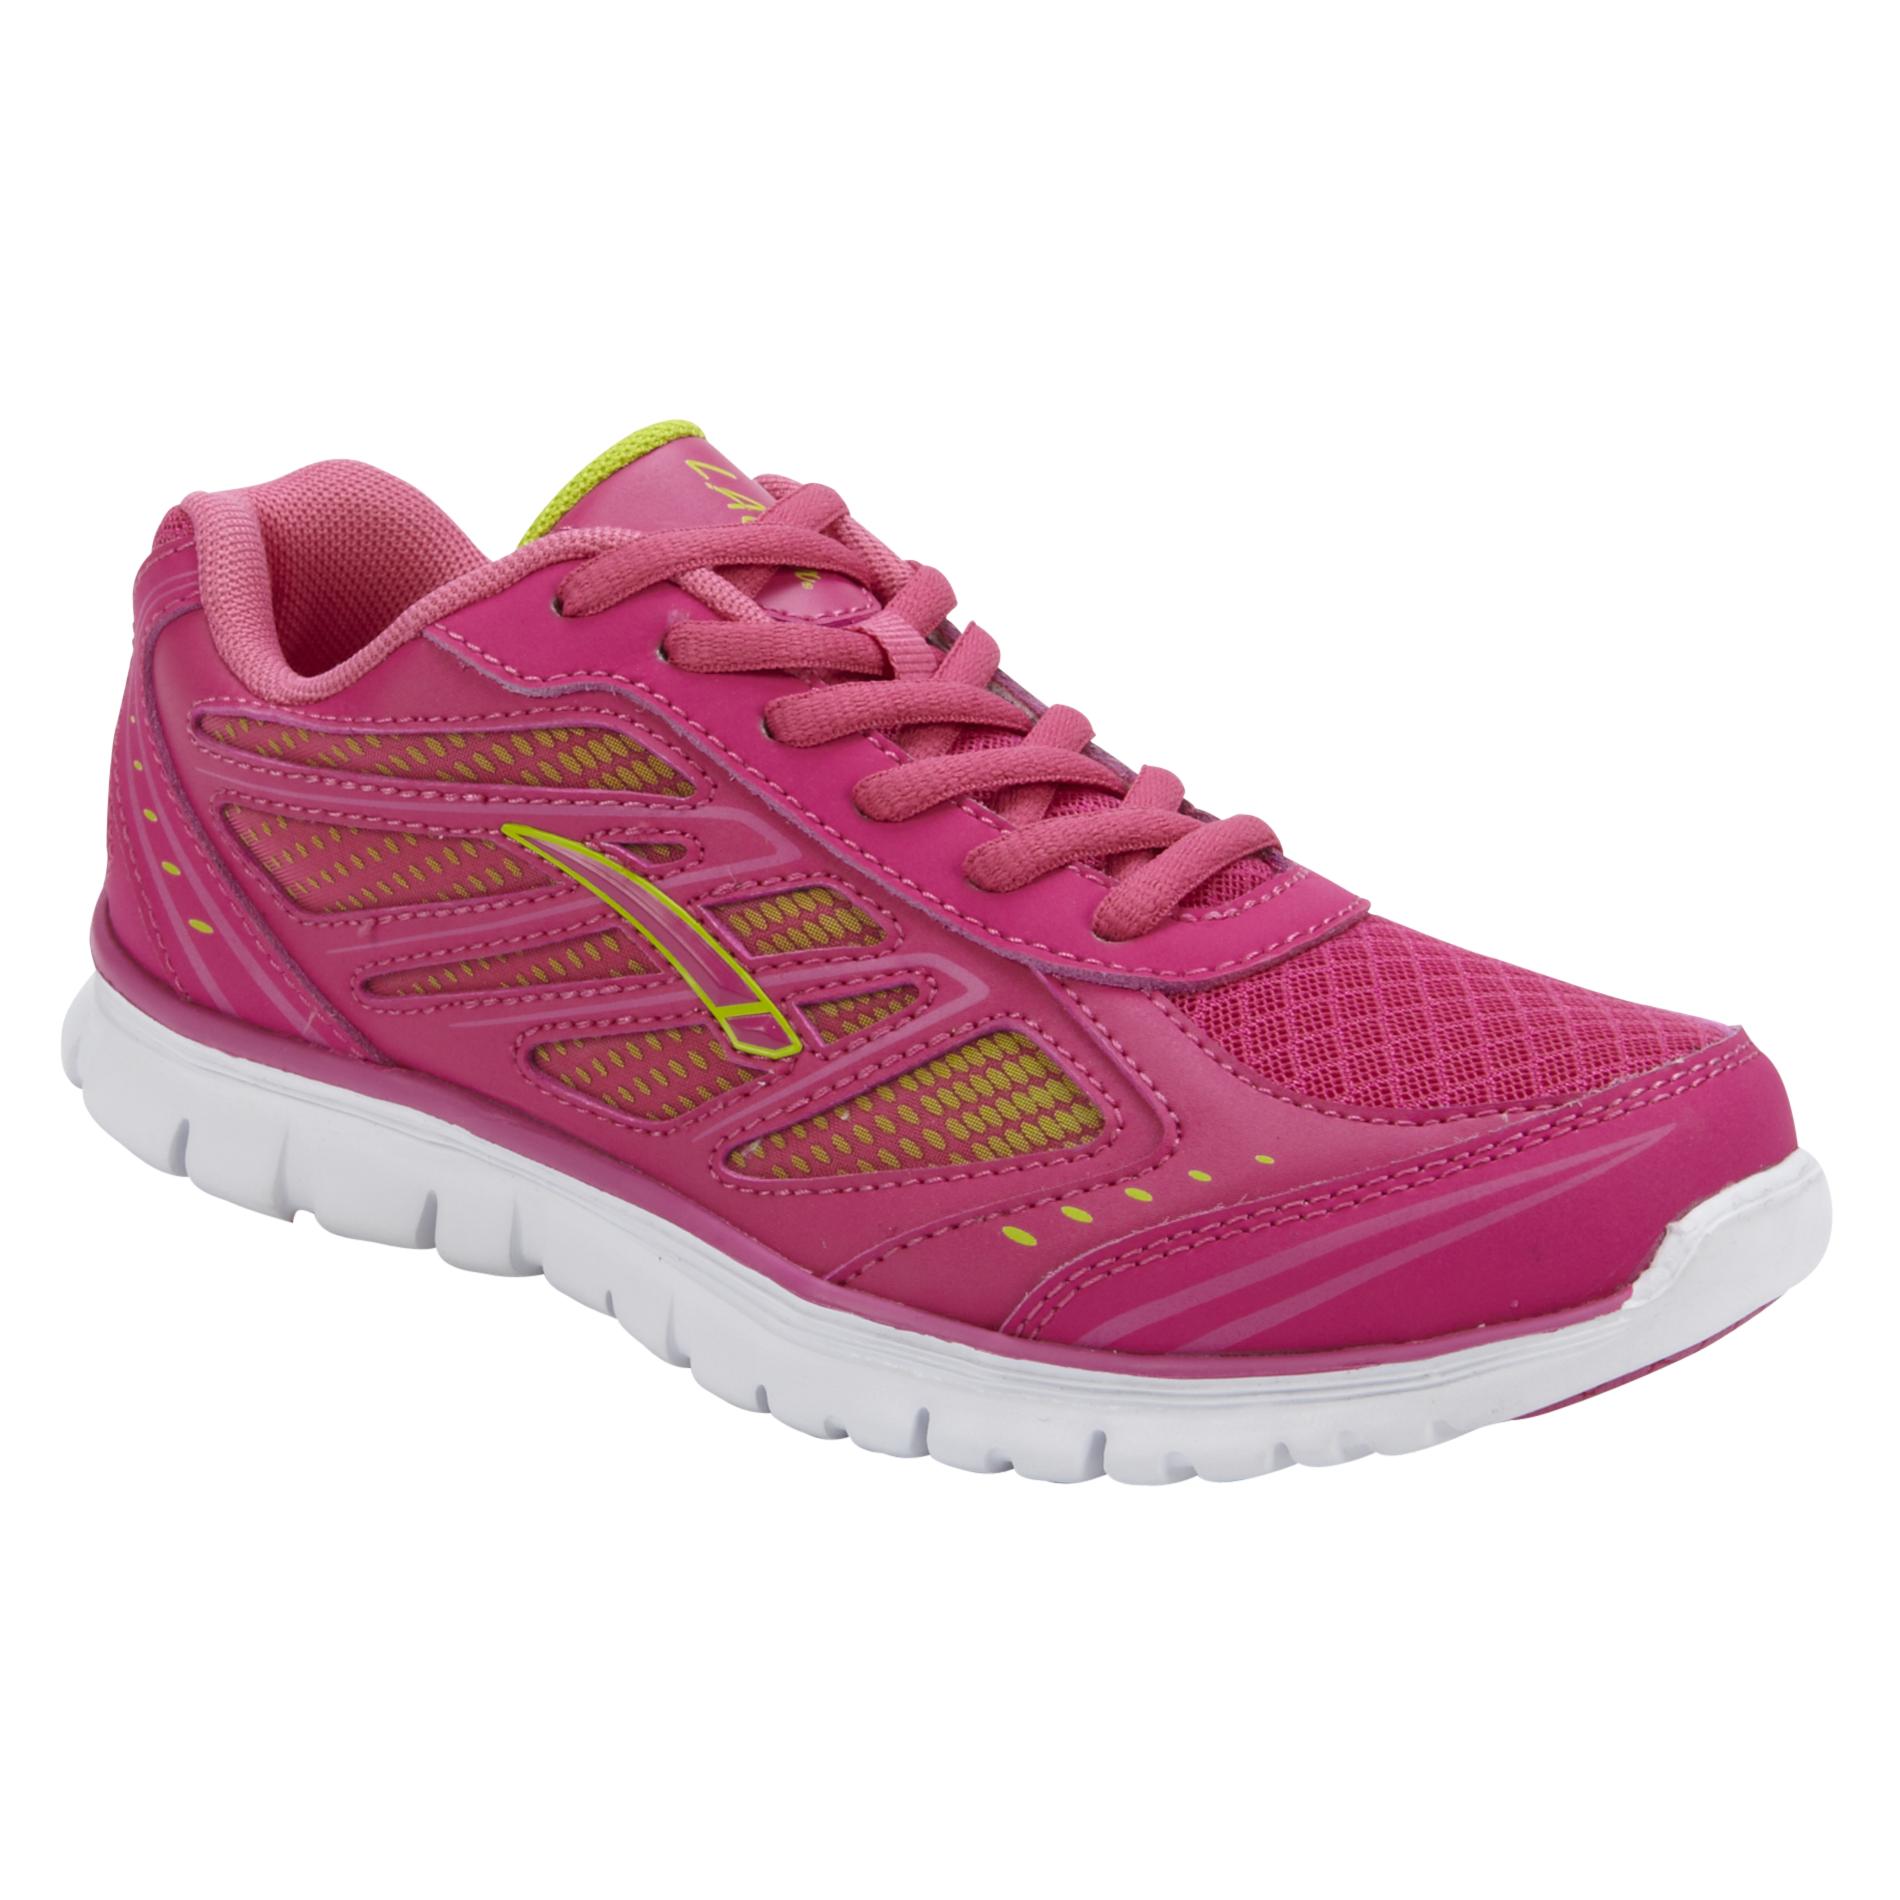 LA Gear Women's Lightning Running Athletic Shoe - Pink/Lime